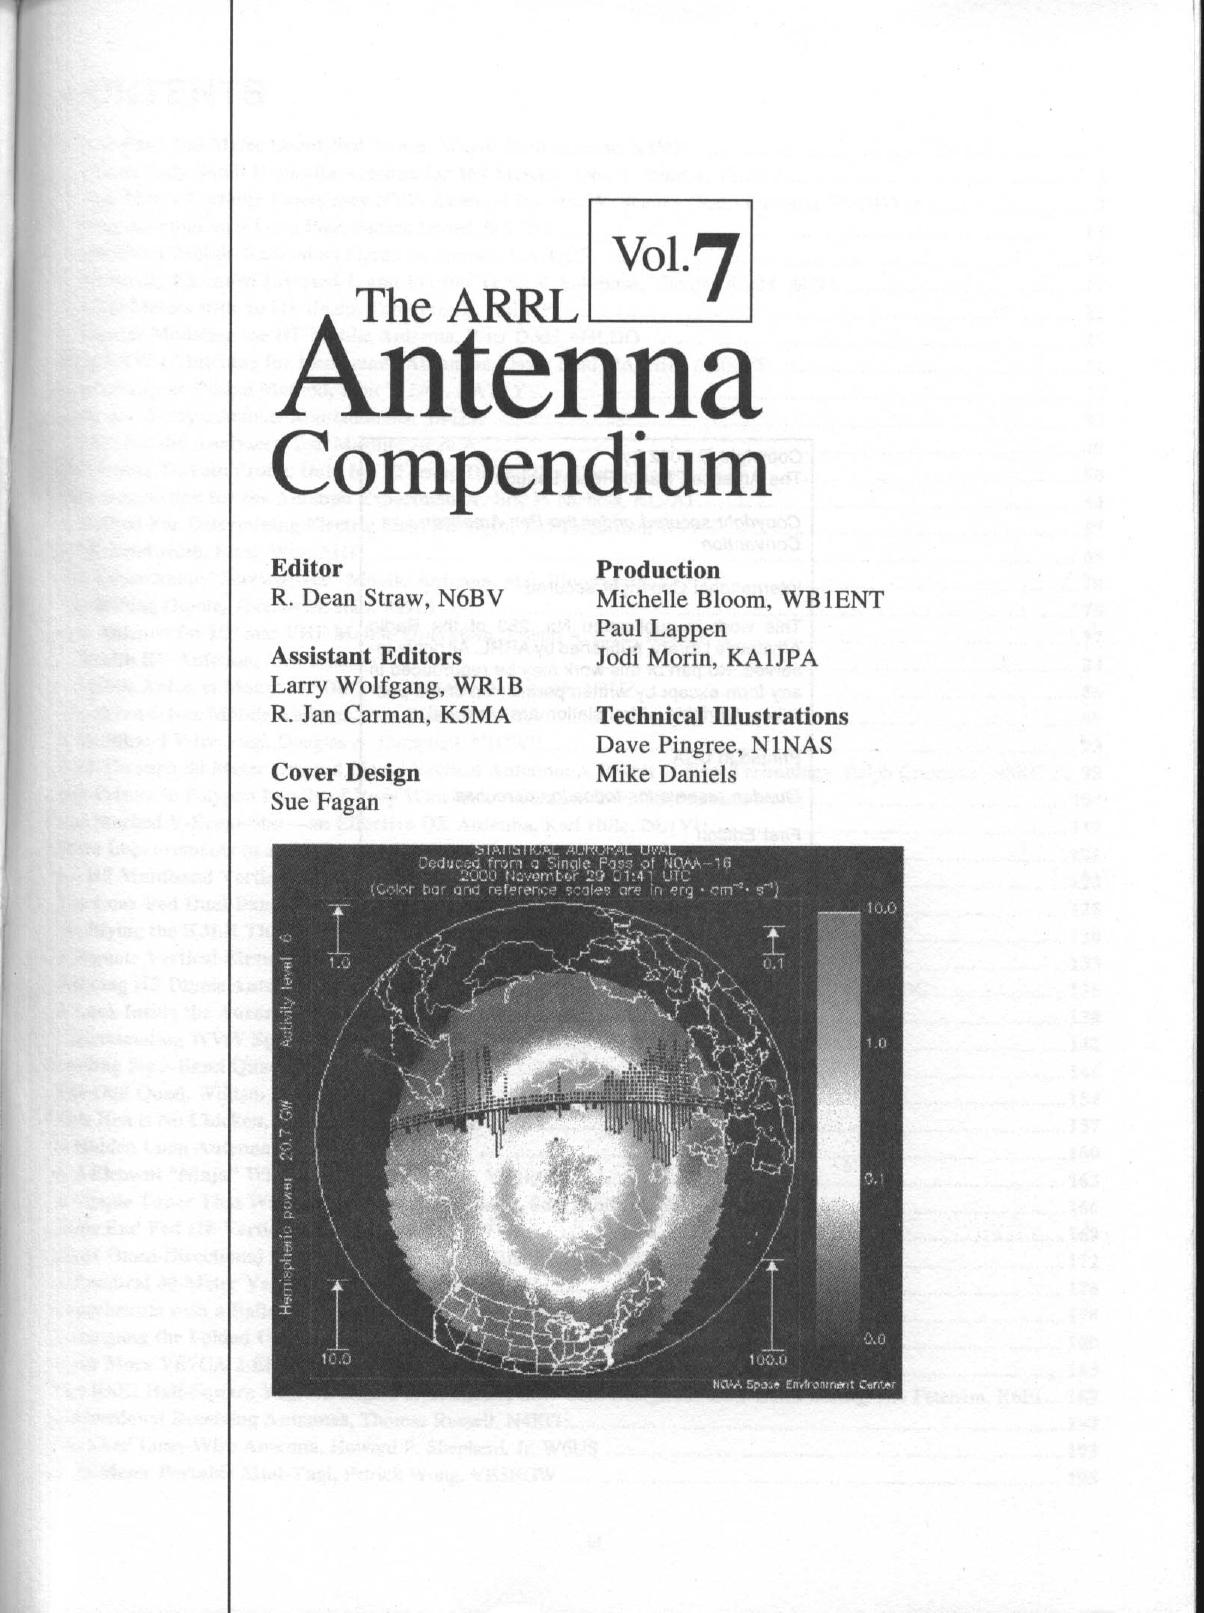 The ARRL Antenna Compendium Vol. 7 by Unknown